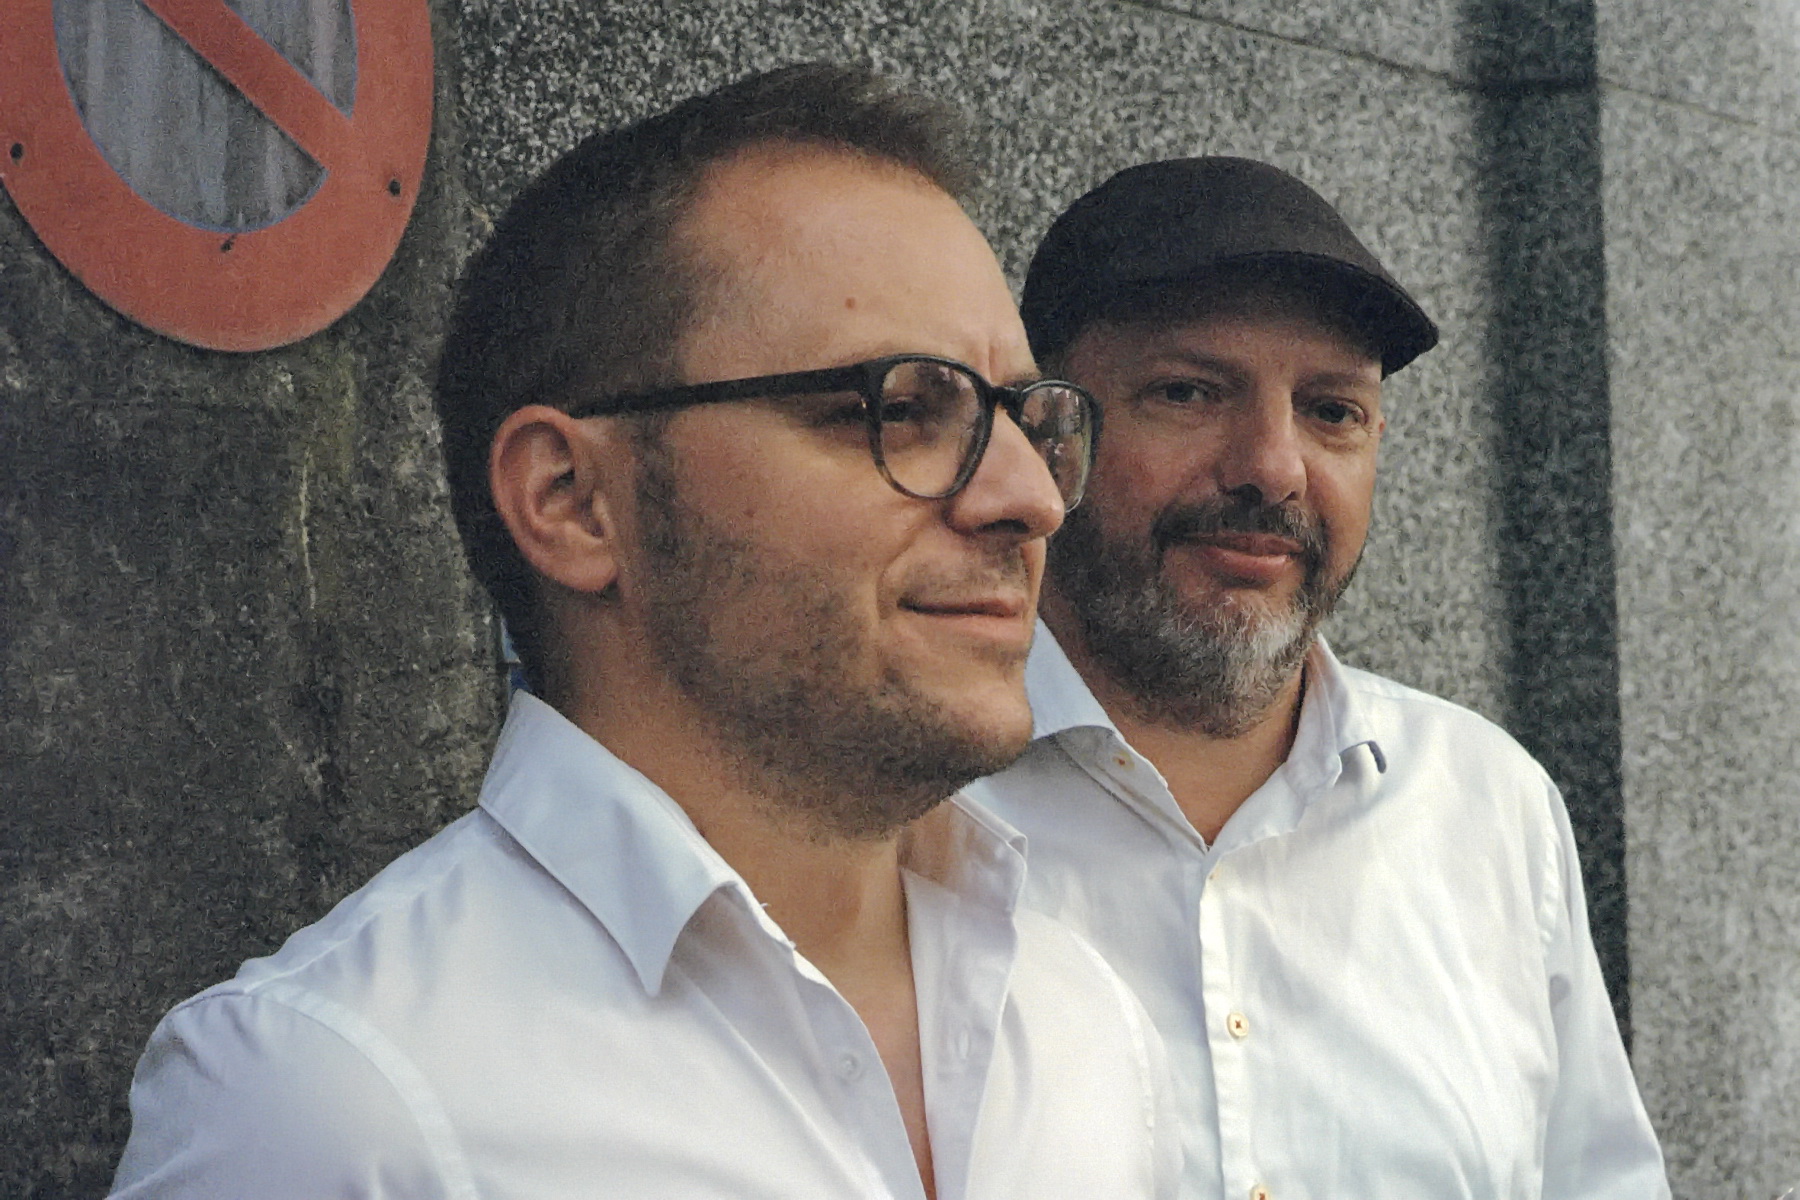 David Keller & Berhard Bichler